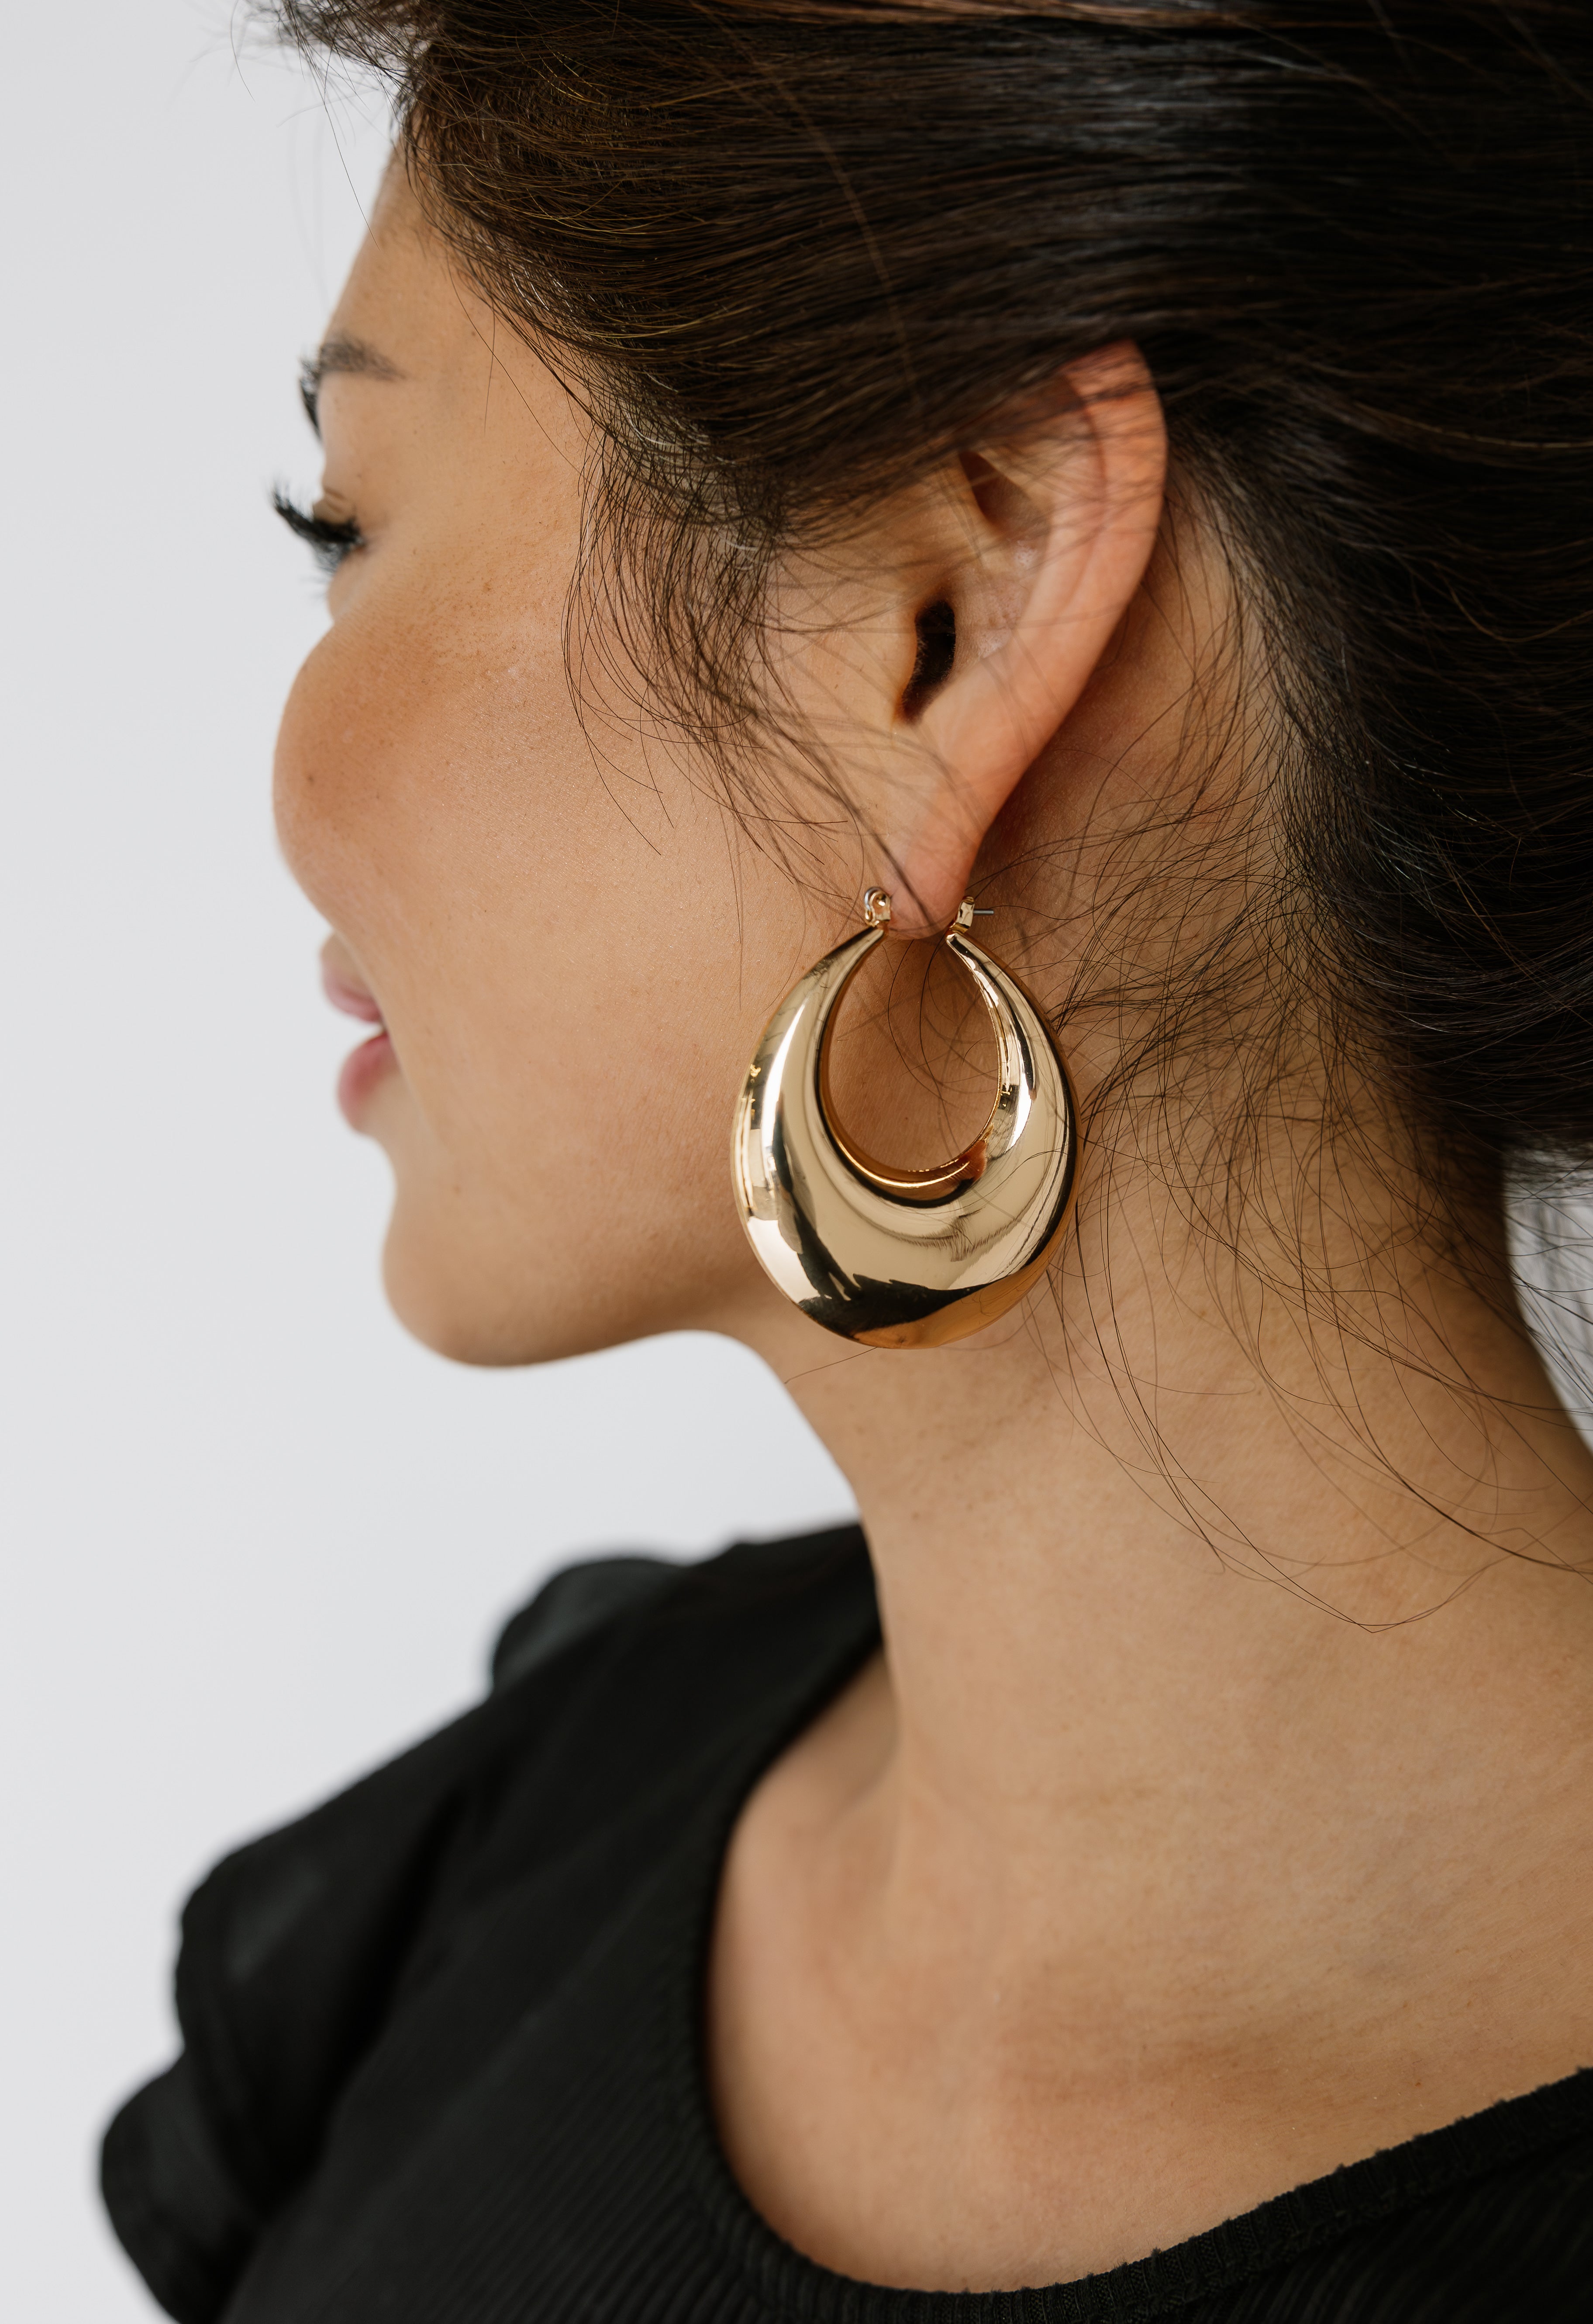 Nola Earrings - GOLD - willows clothing Earrings